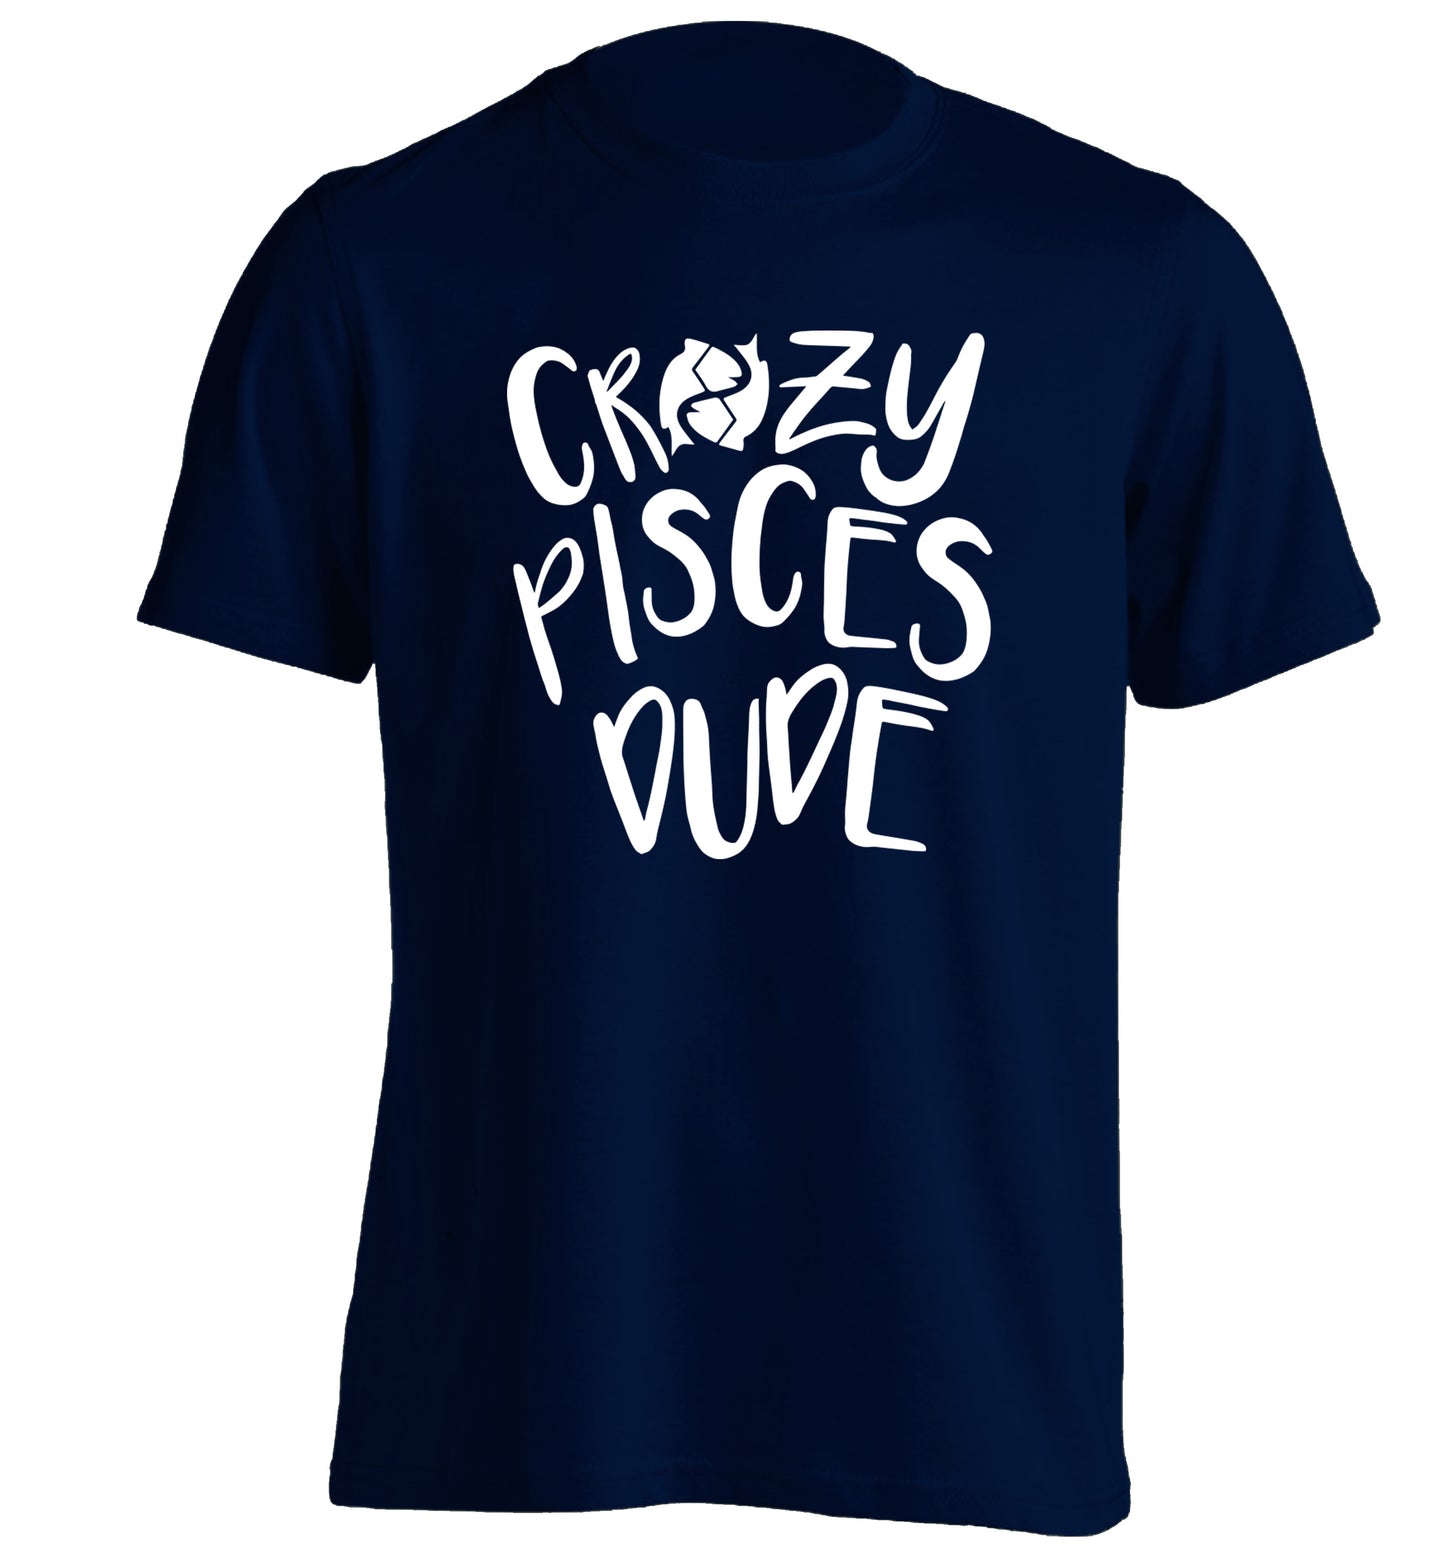 Crazy pisces dude adults unisex navy Tshirt 2XL